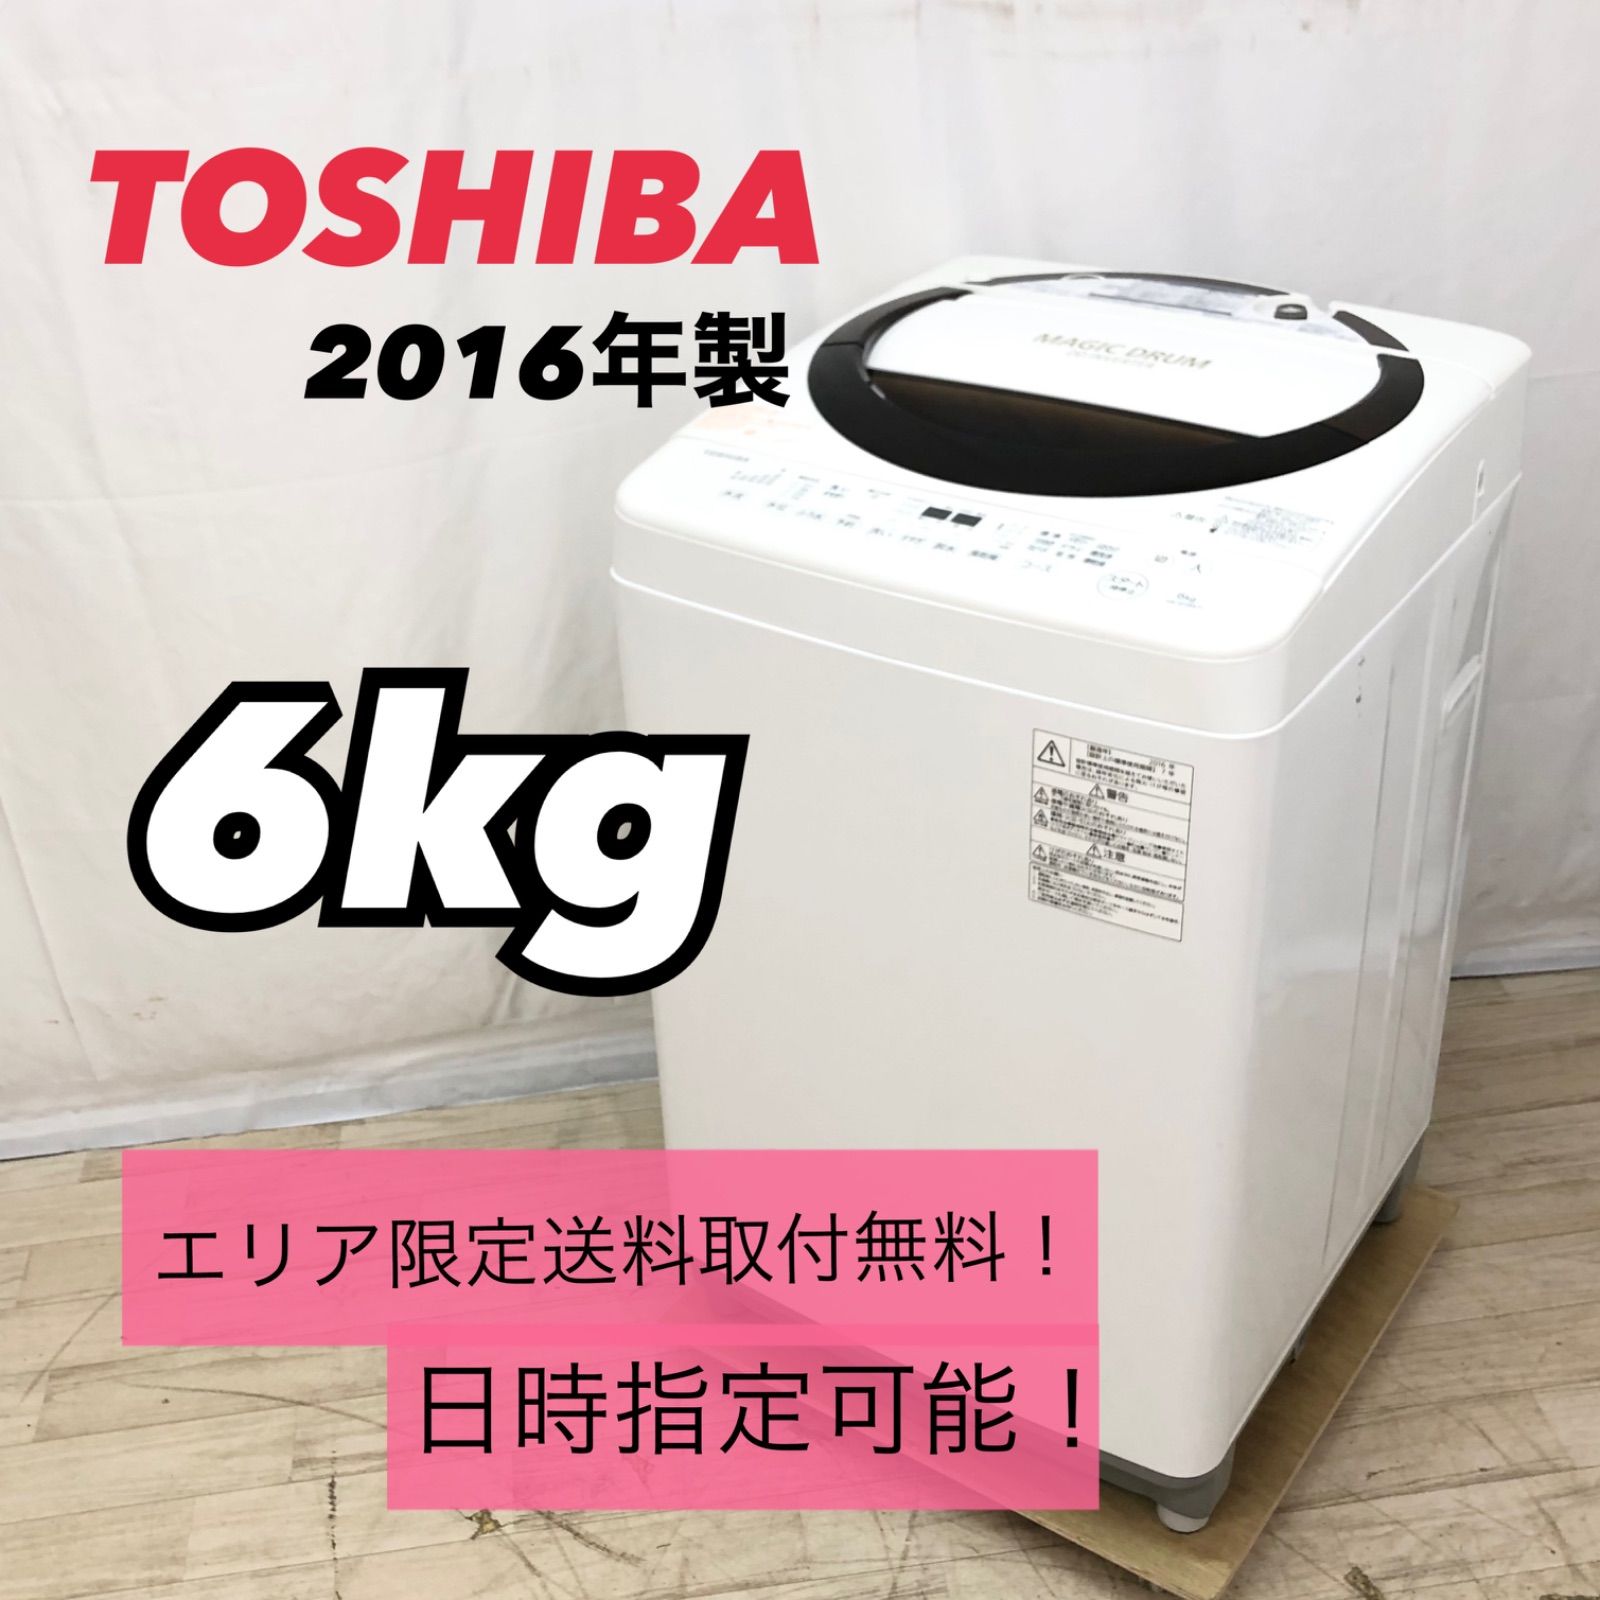 TOSHIBA 東芝 6kg 縦型洗濯機 AW-6D3M(T) 2016年製 ブラウン / A